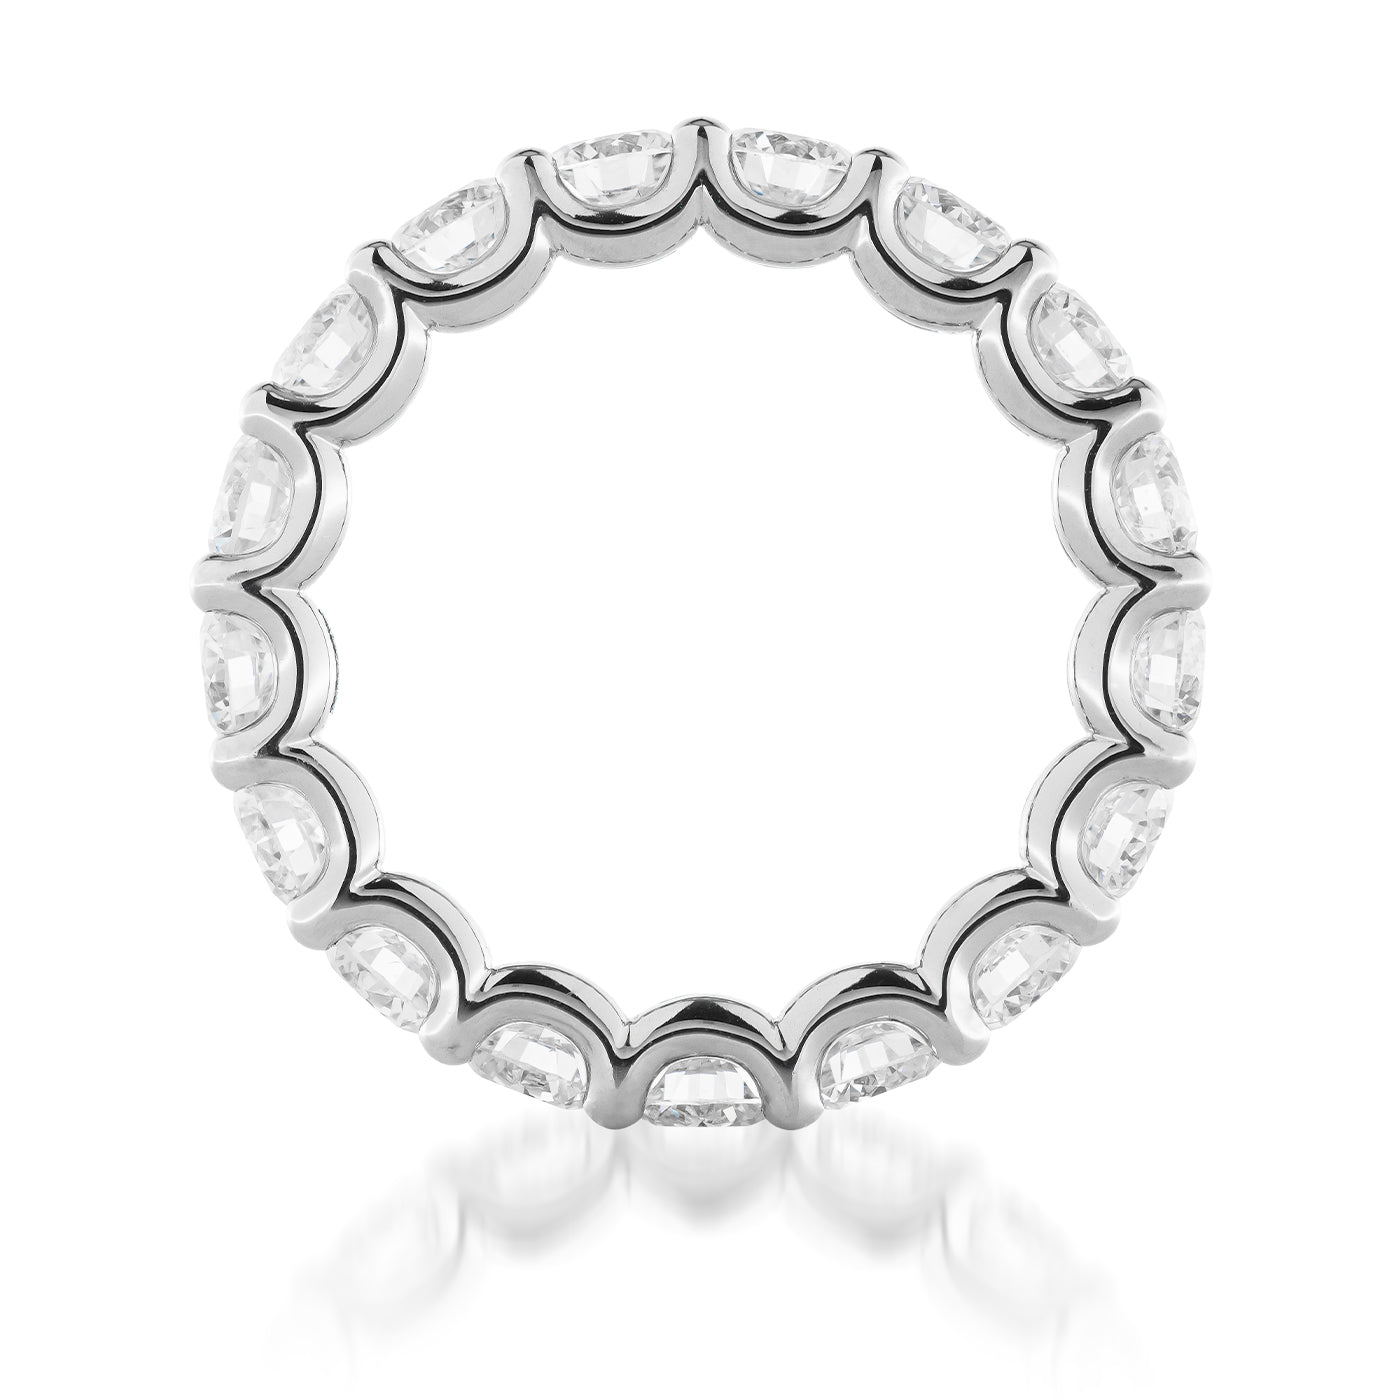 Raffi&Co.® 14K White Gold Round Brilliant Lab Diamond Eternity Ring